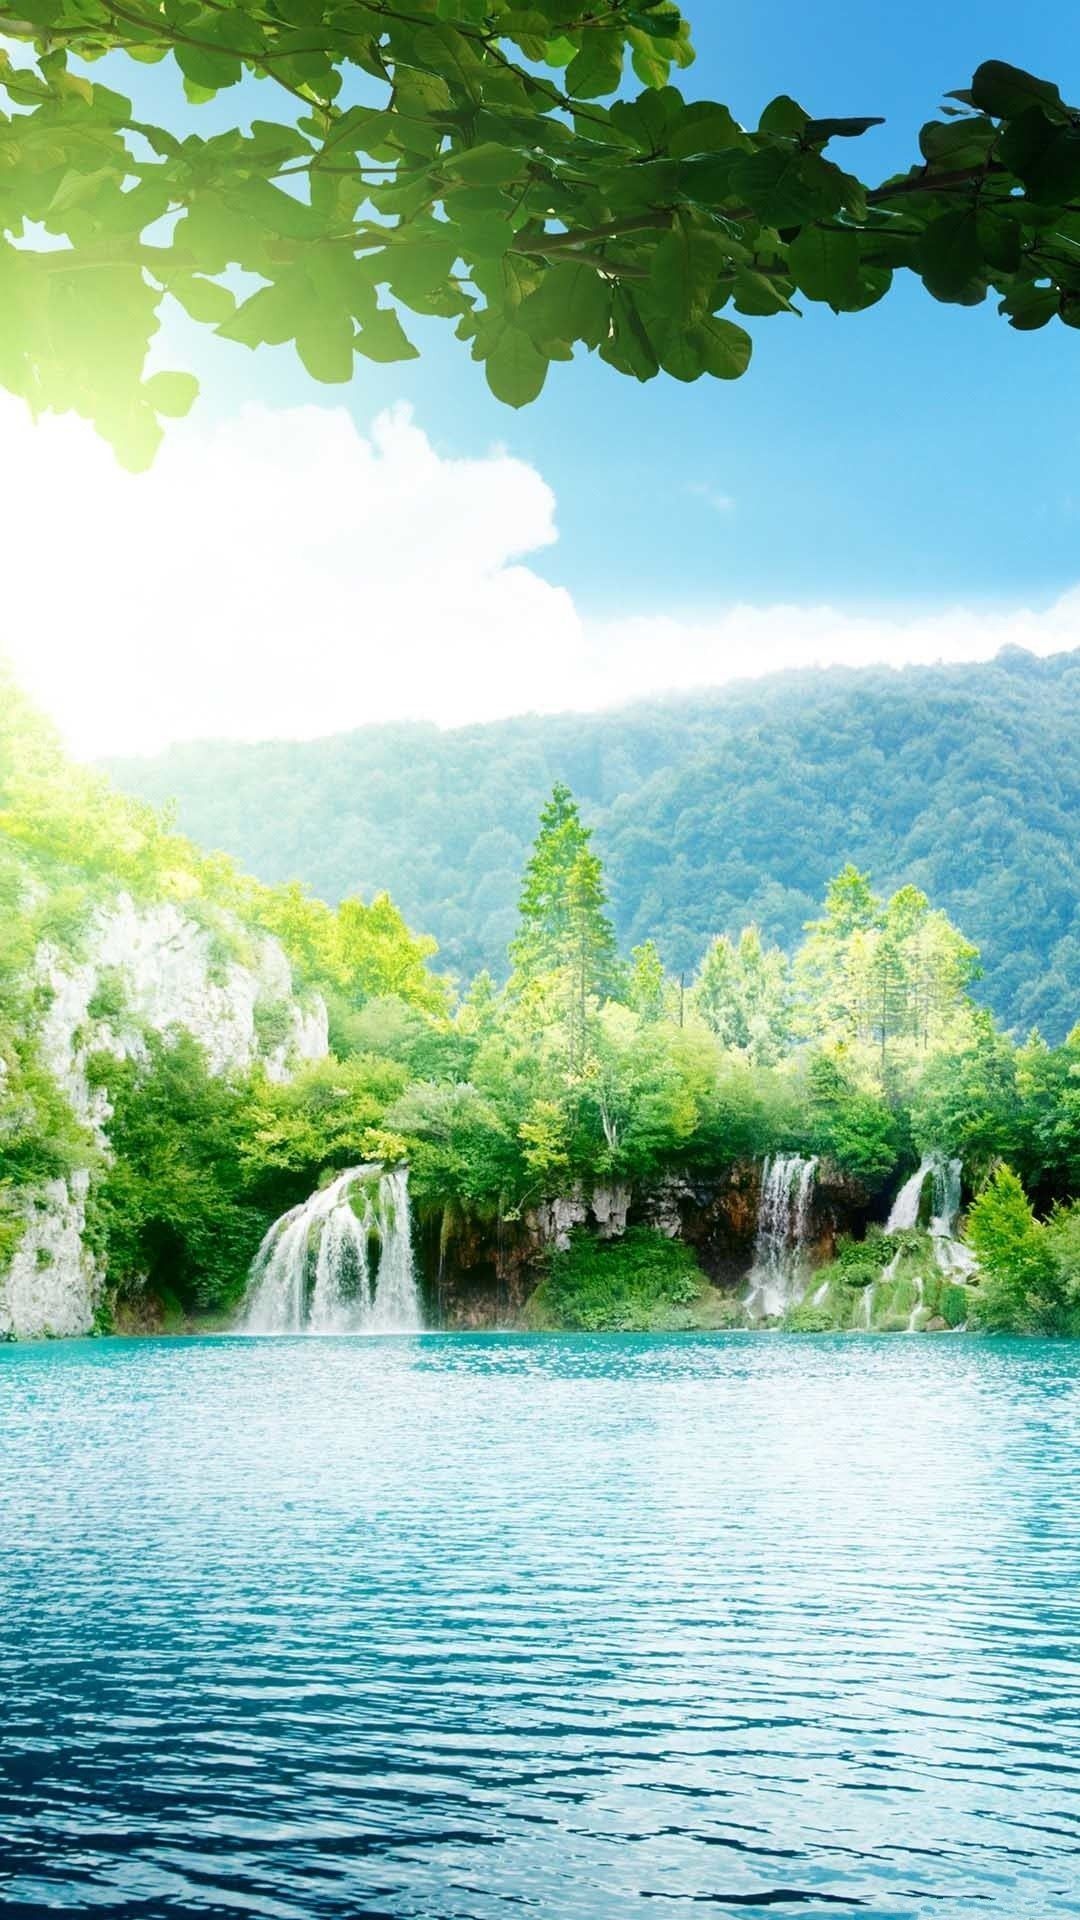 Enchanting Lake Waterfalls Blue Sky 4K HD Android and iPhone Wallpaper Background and Lockscree. Scenery wallpaper, Beautiful wallpaper hd, Best nature wallpaper